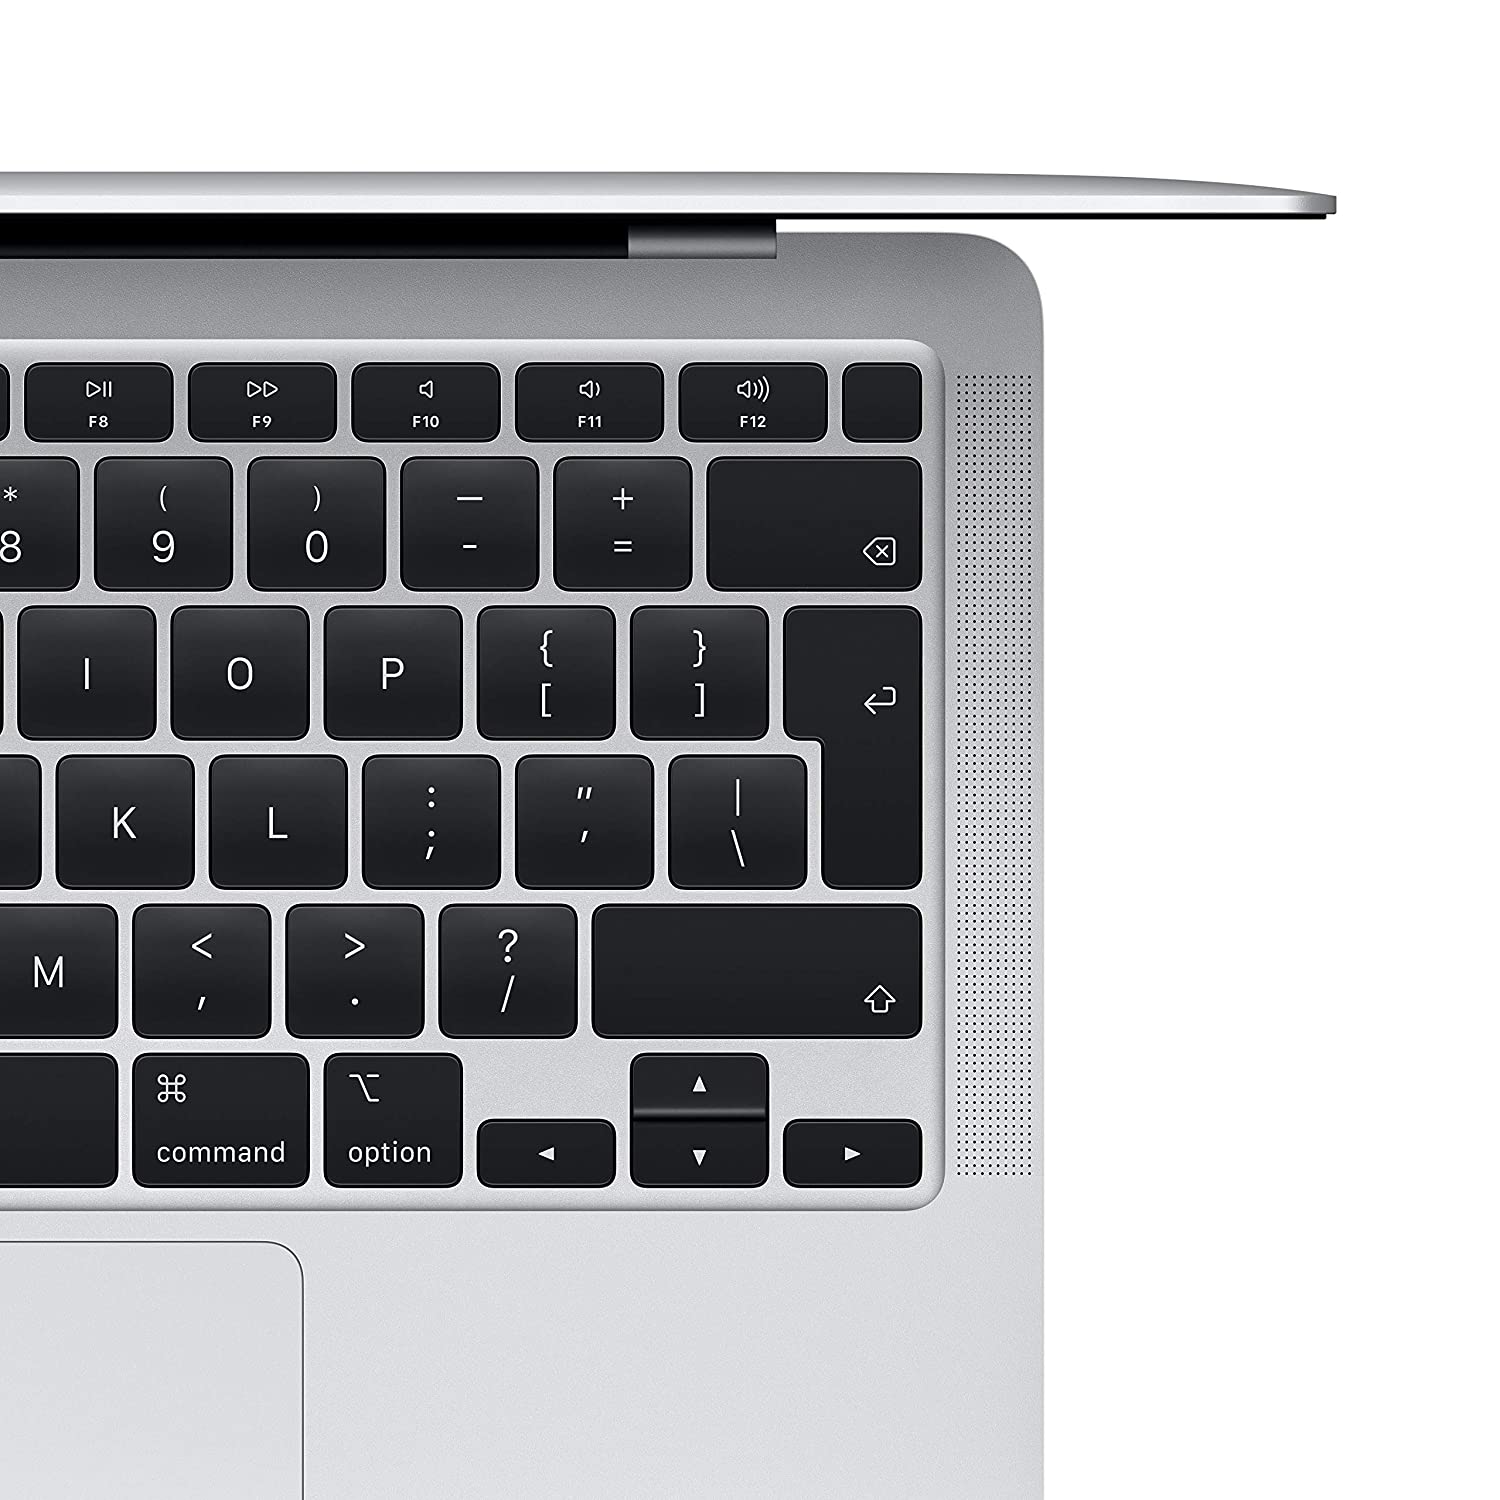 Apple MacBook Air (13-inch, 1.1GHz Dual-core 10th-Generation Intel Core i3 Processor, 8GB RAM, 256GB Storage) - Silver